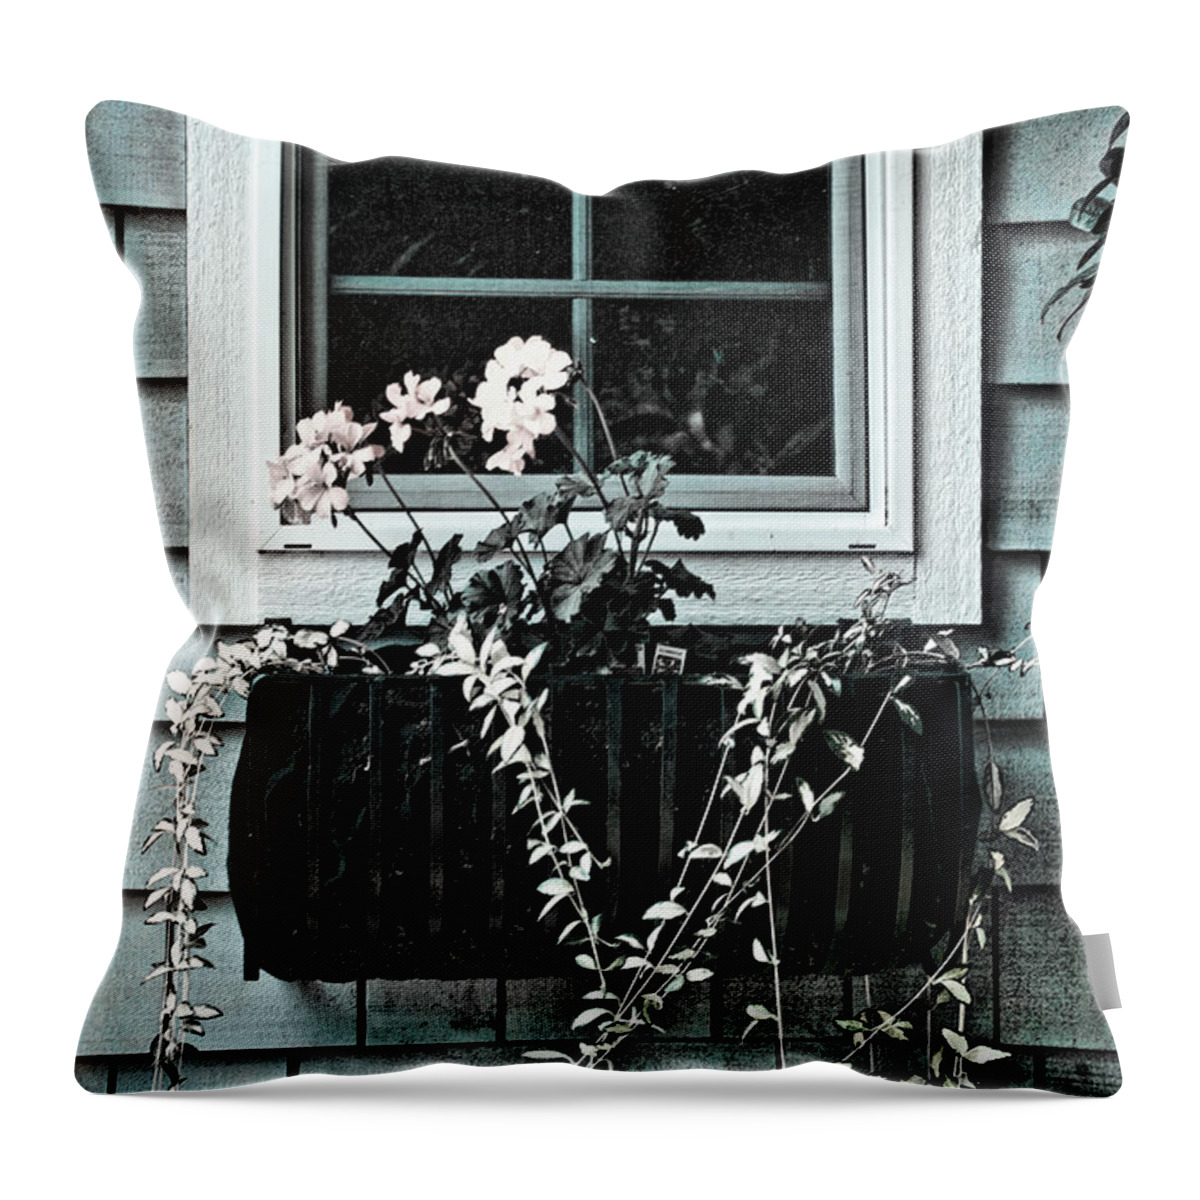 Flower Basket Throw Pillow featuring the photograph Window Dresser by Bonnie Bruno